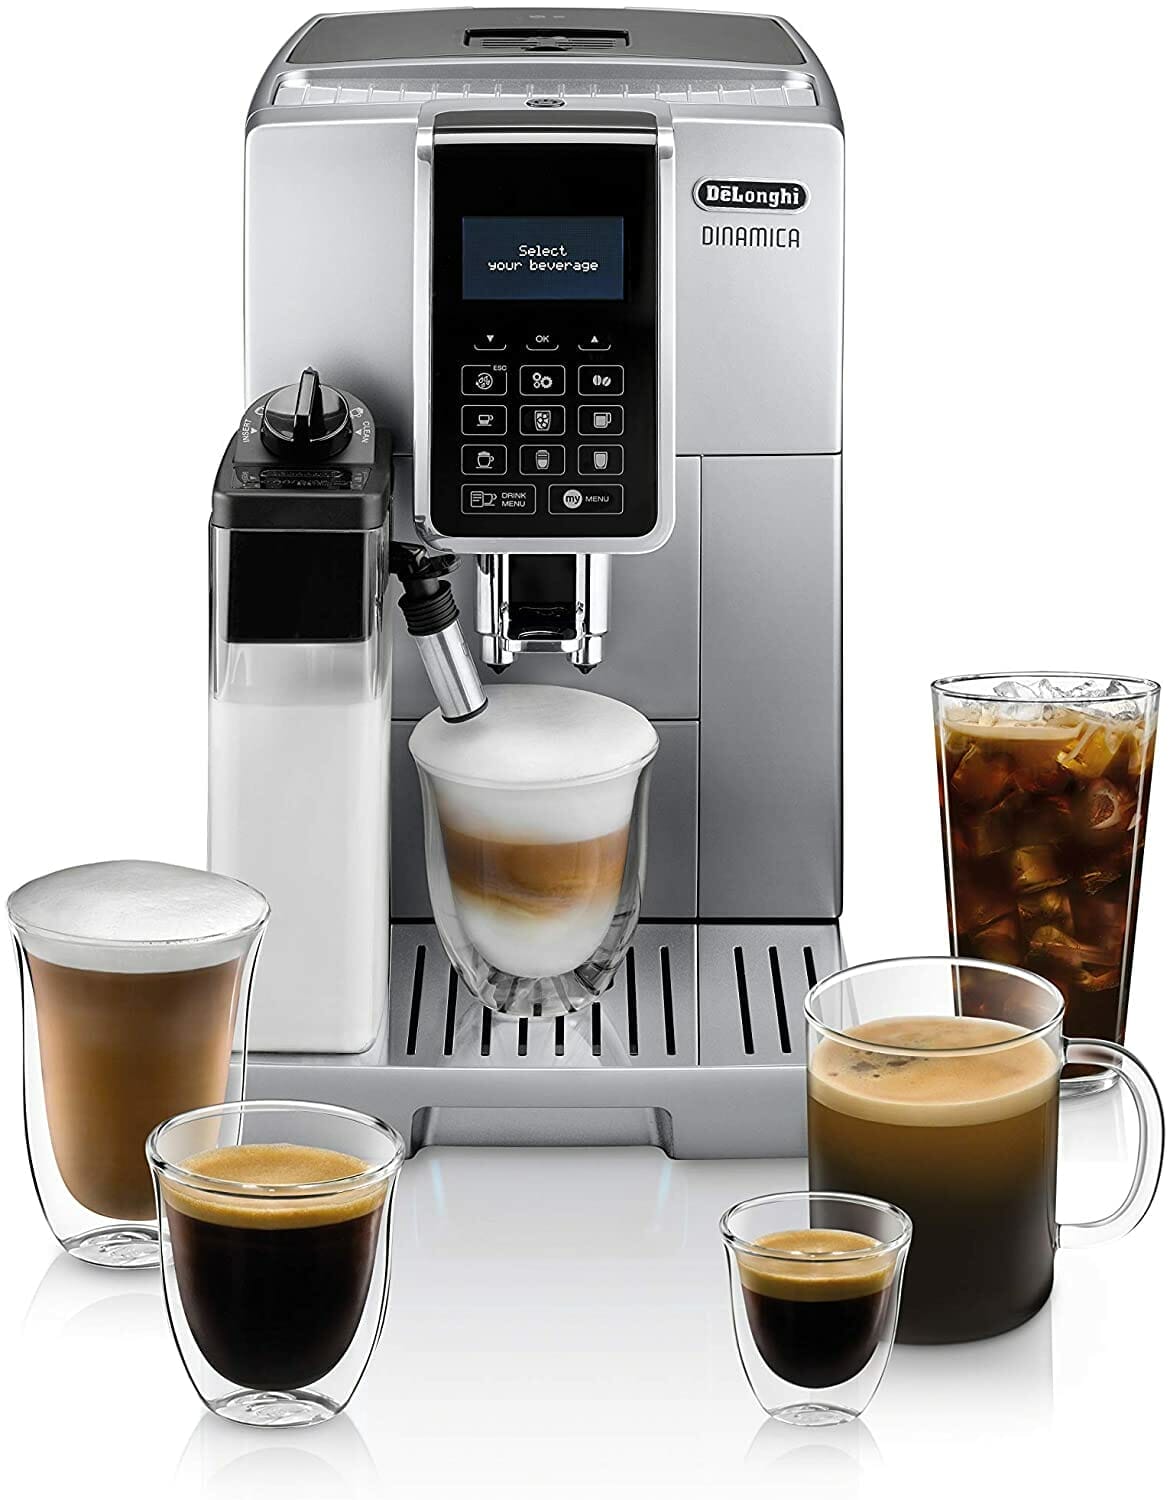 De'Longhi ECAM35075SI Dinamica Fully Automatic Espresso Machine Review